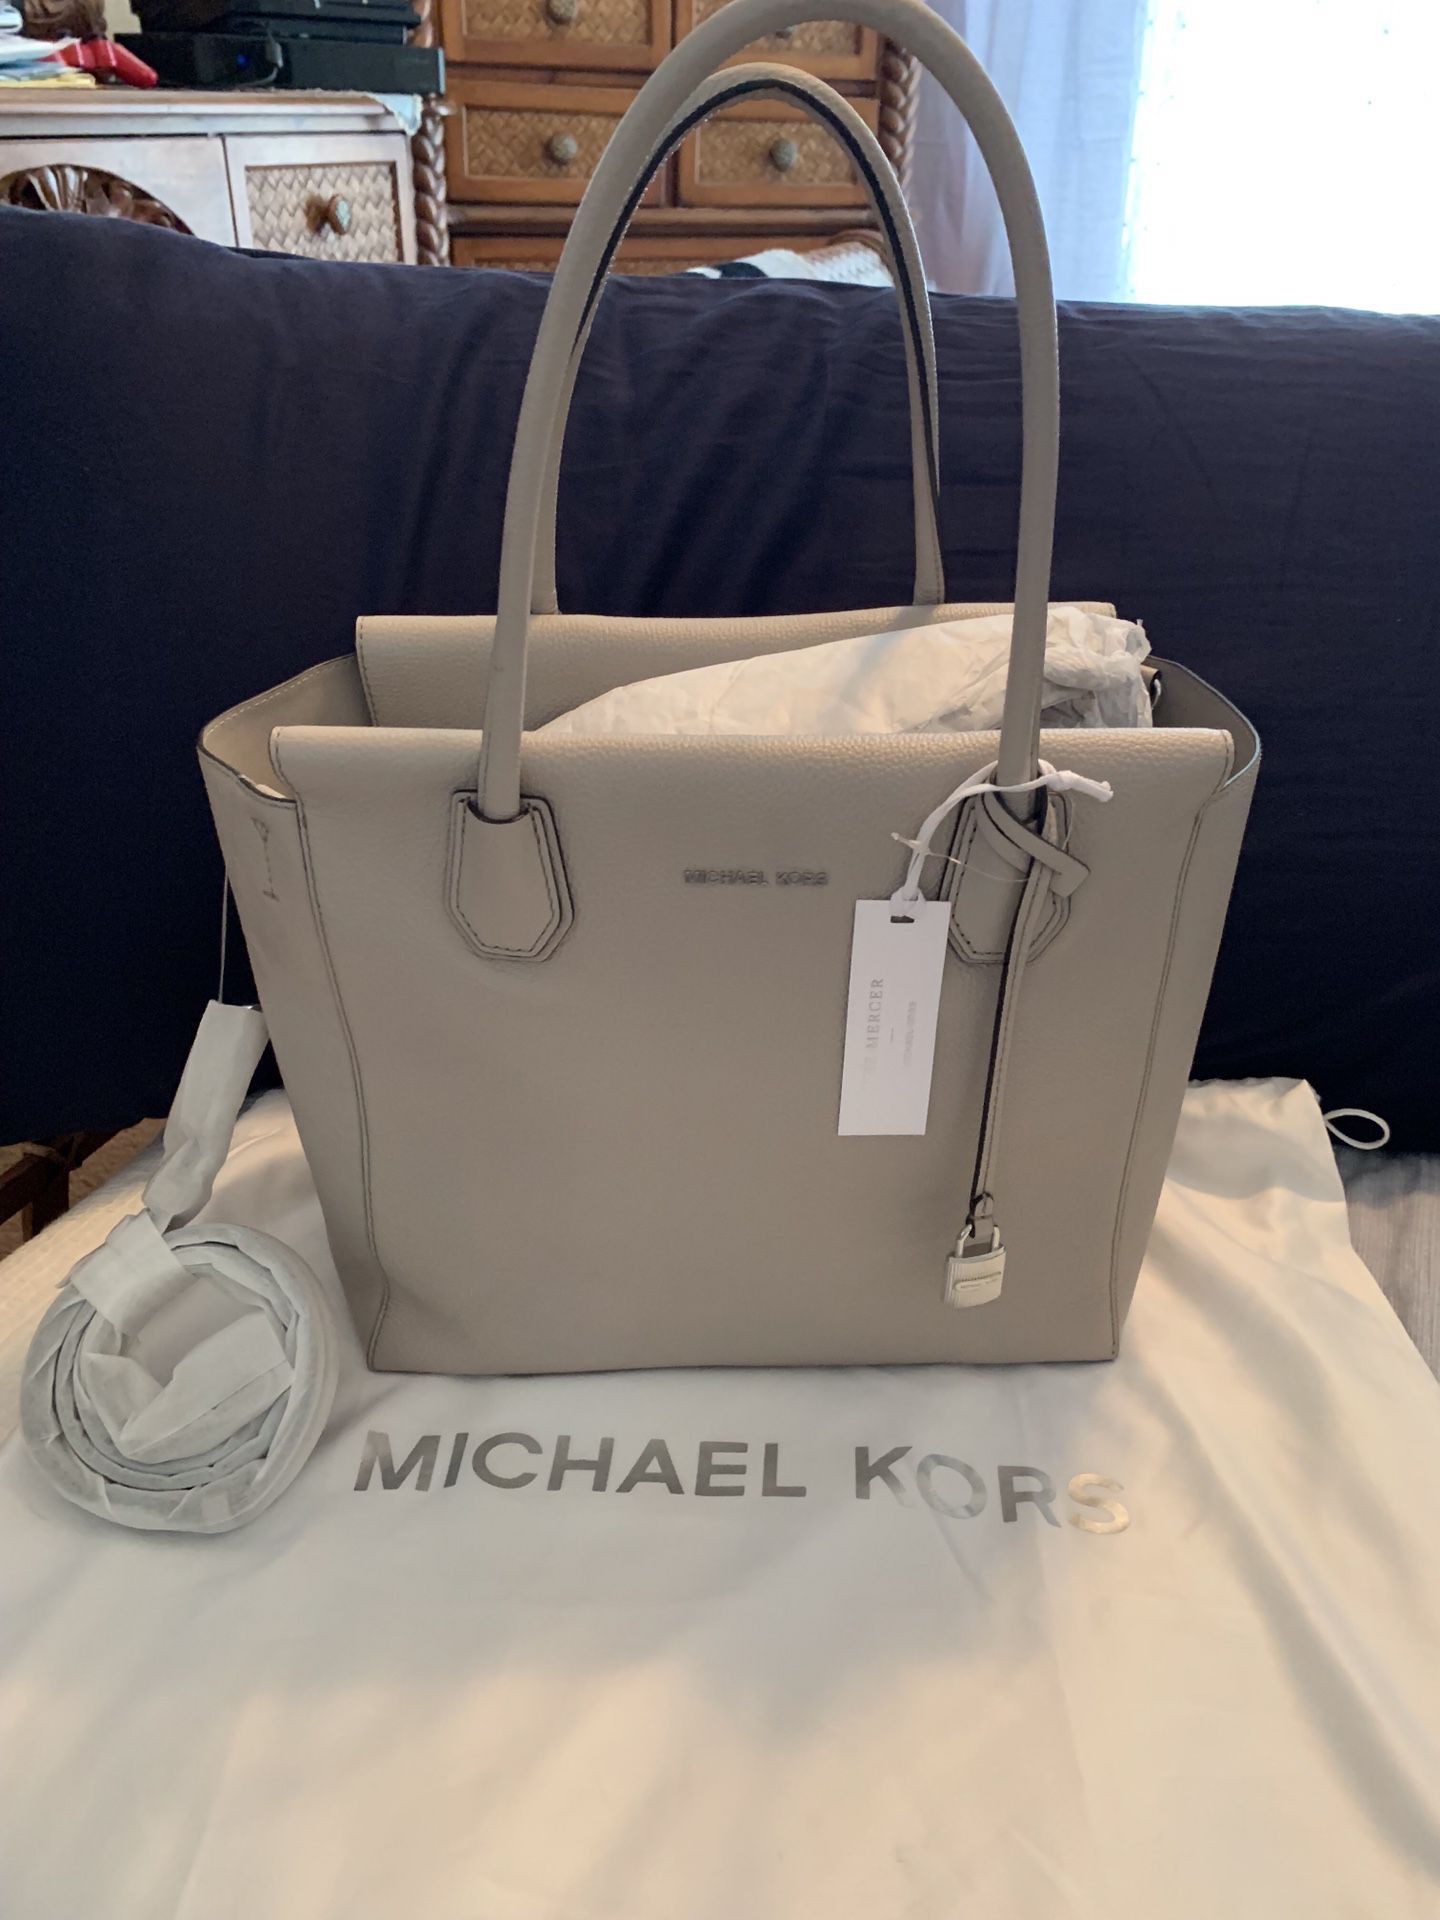 Michael Kors-Mercer Large Satchel Handbag- Color Cement - Brand New